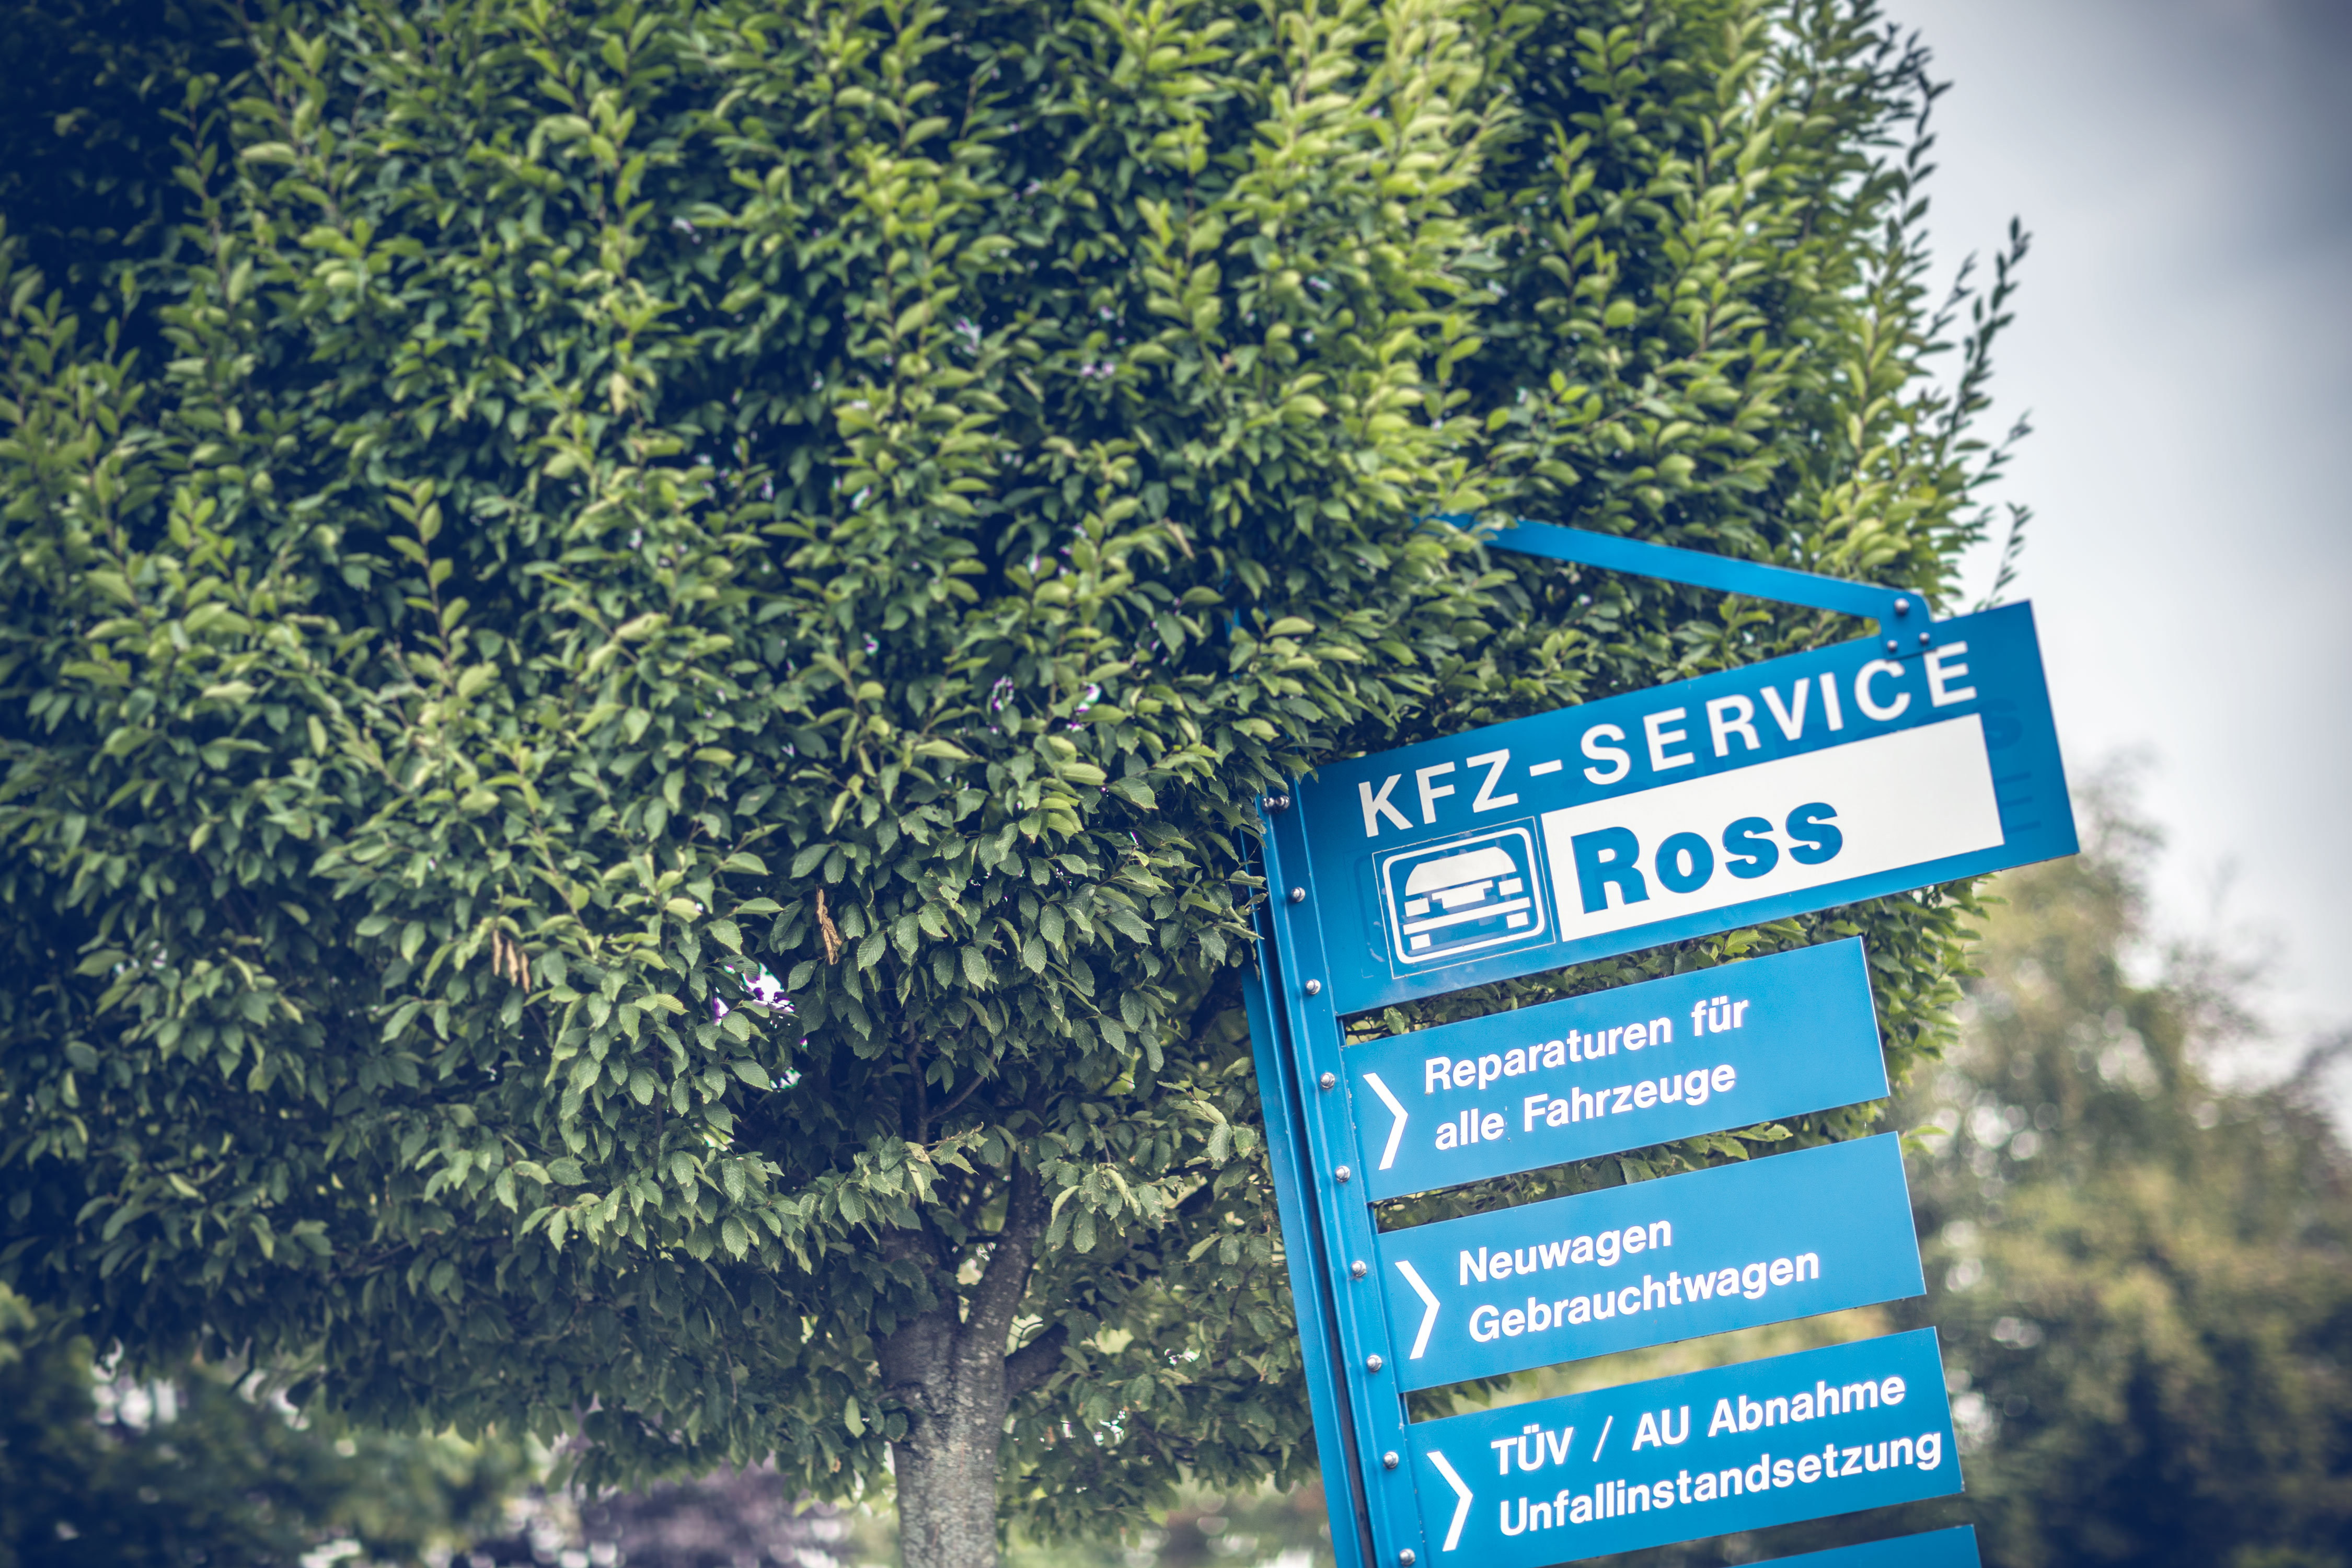 Autoservice Schild der KFZ Werkstatt Ross in Hiddingsel